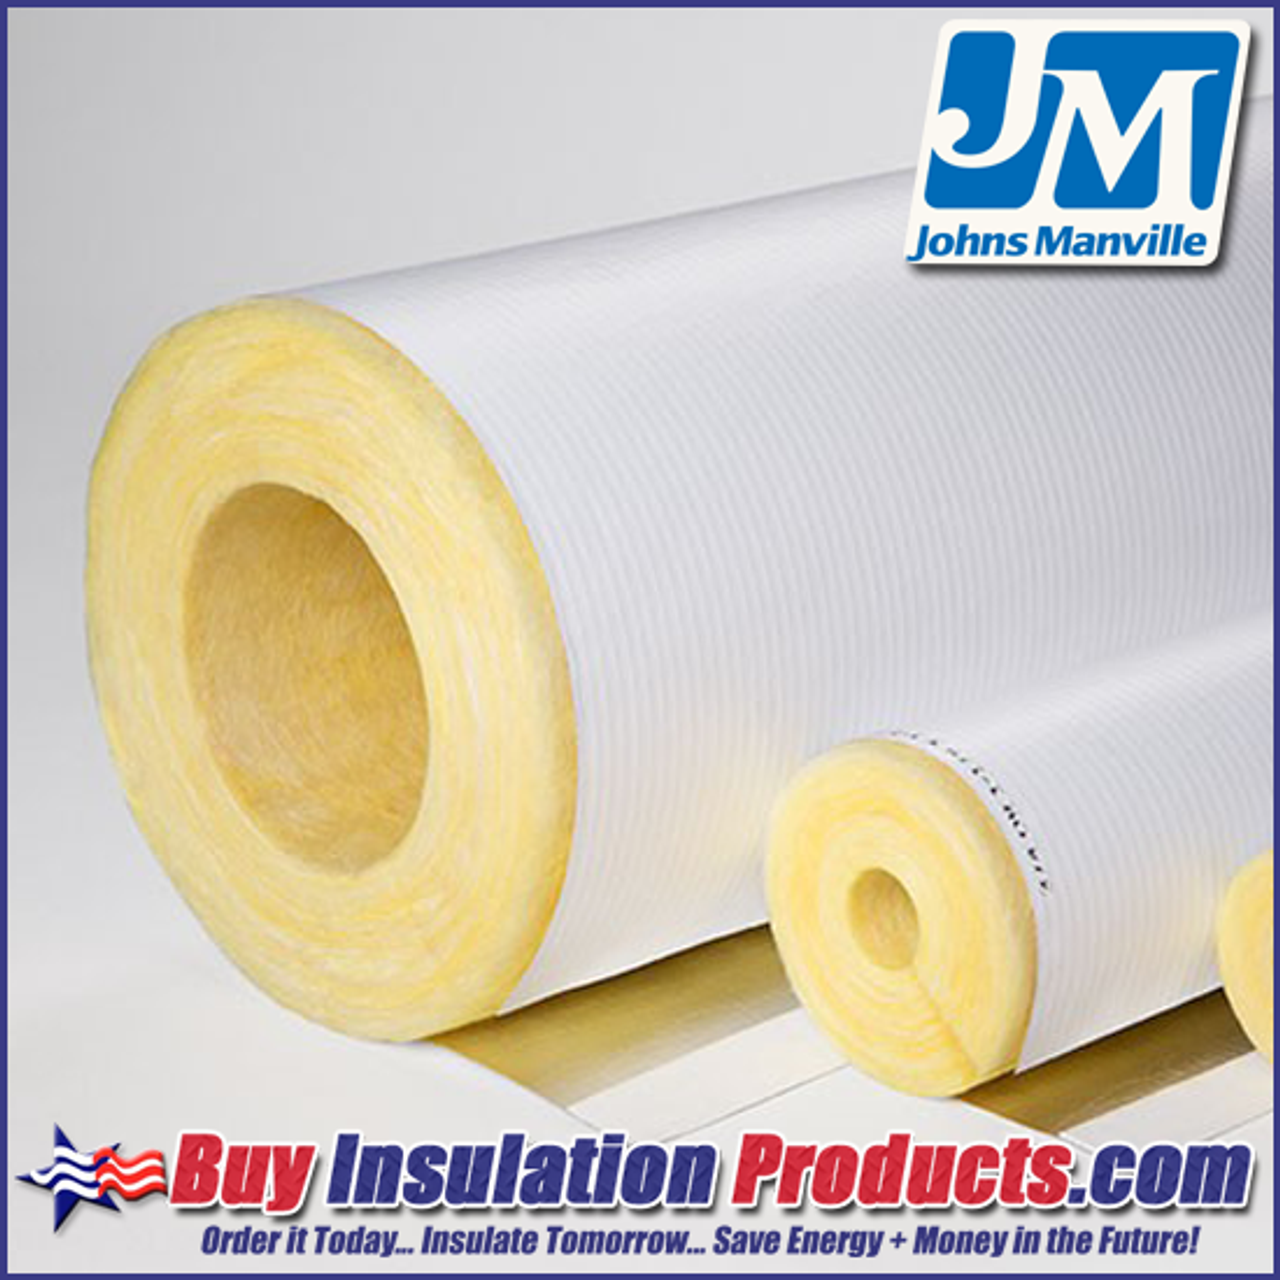 Polypropylene-coated ASJ 12 x 2-1/2 Fiberglass Pipe Insulation Bulk Johns Manville Company 90018115 Johns Manville Micro-Lok HP Ultra 3 LF/CT